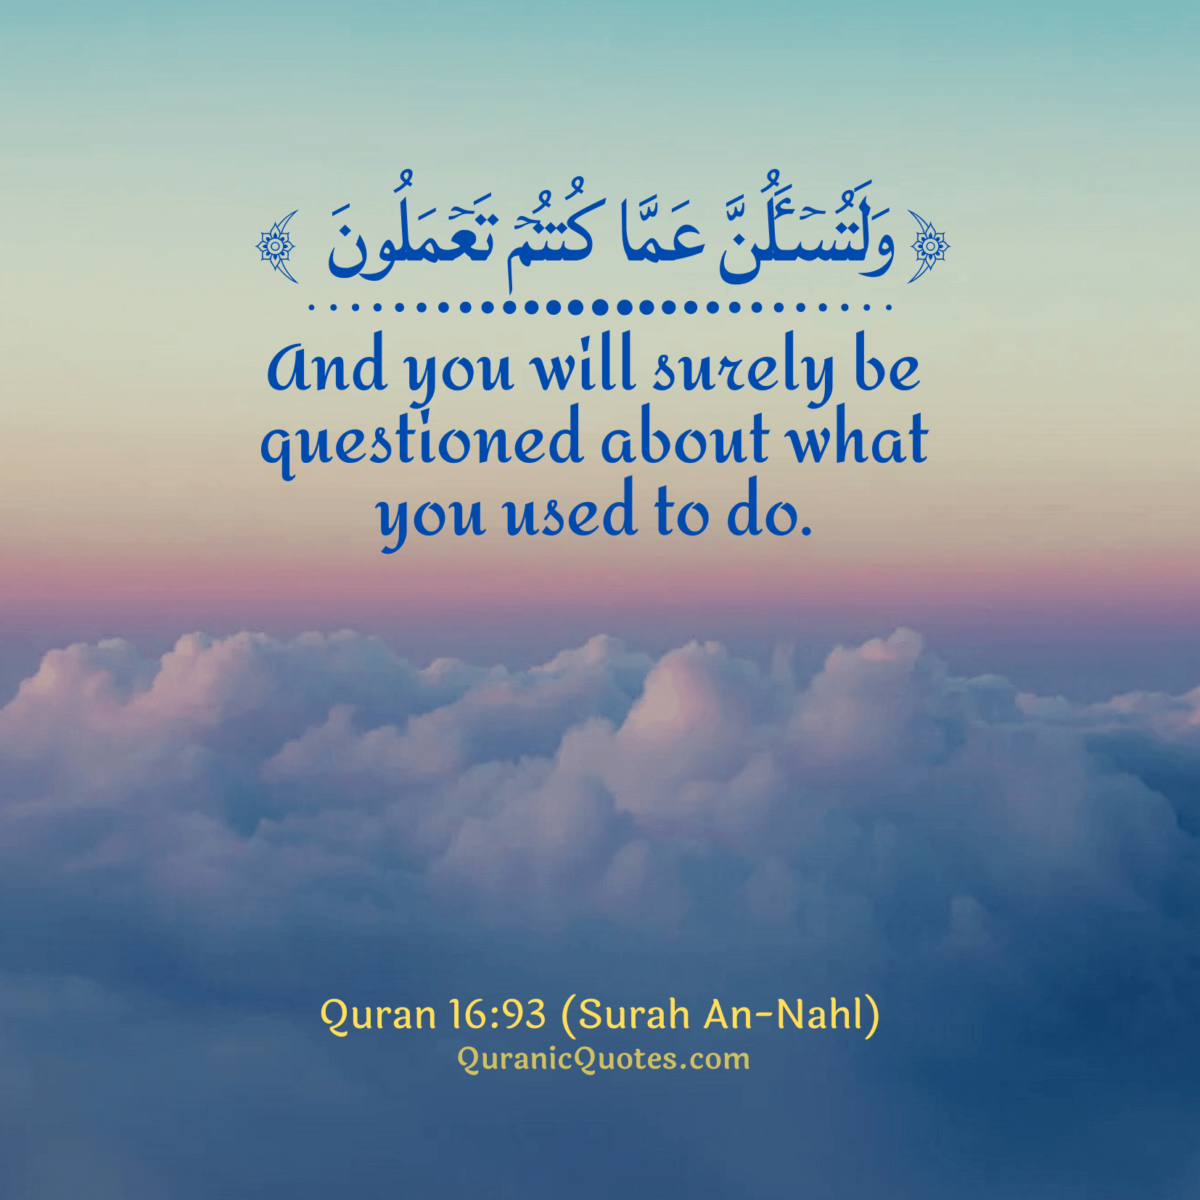 Quranic Quotes — 402 The Quran 16:93 (Surah an-Nahl)